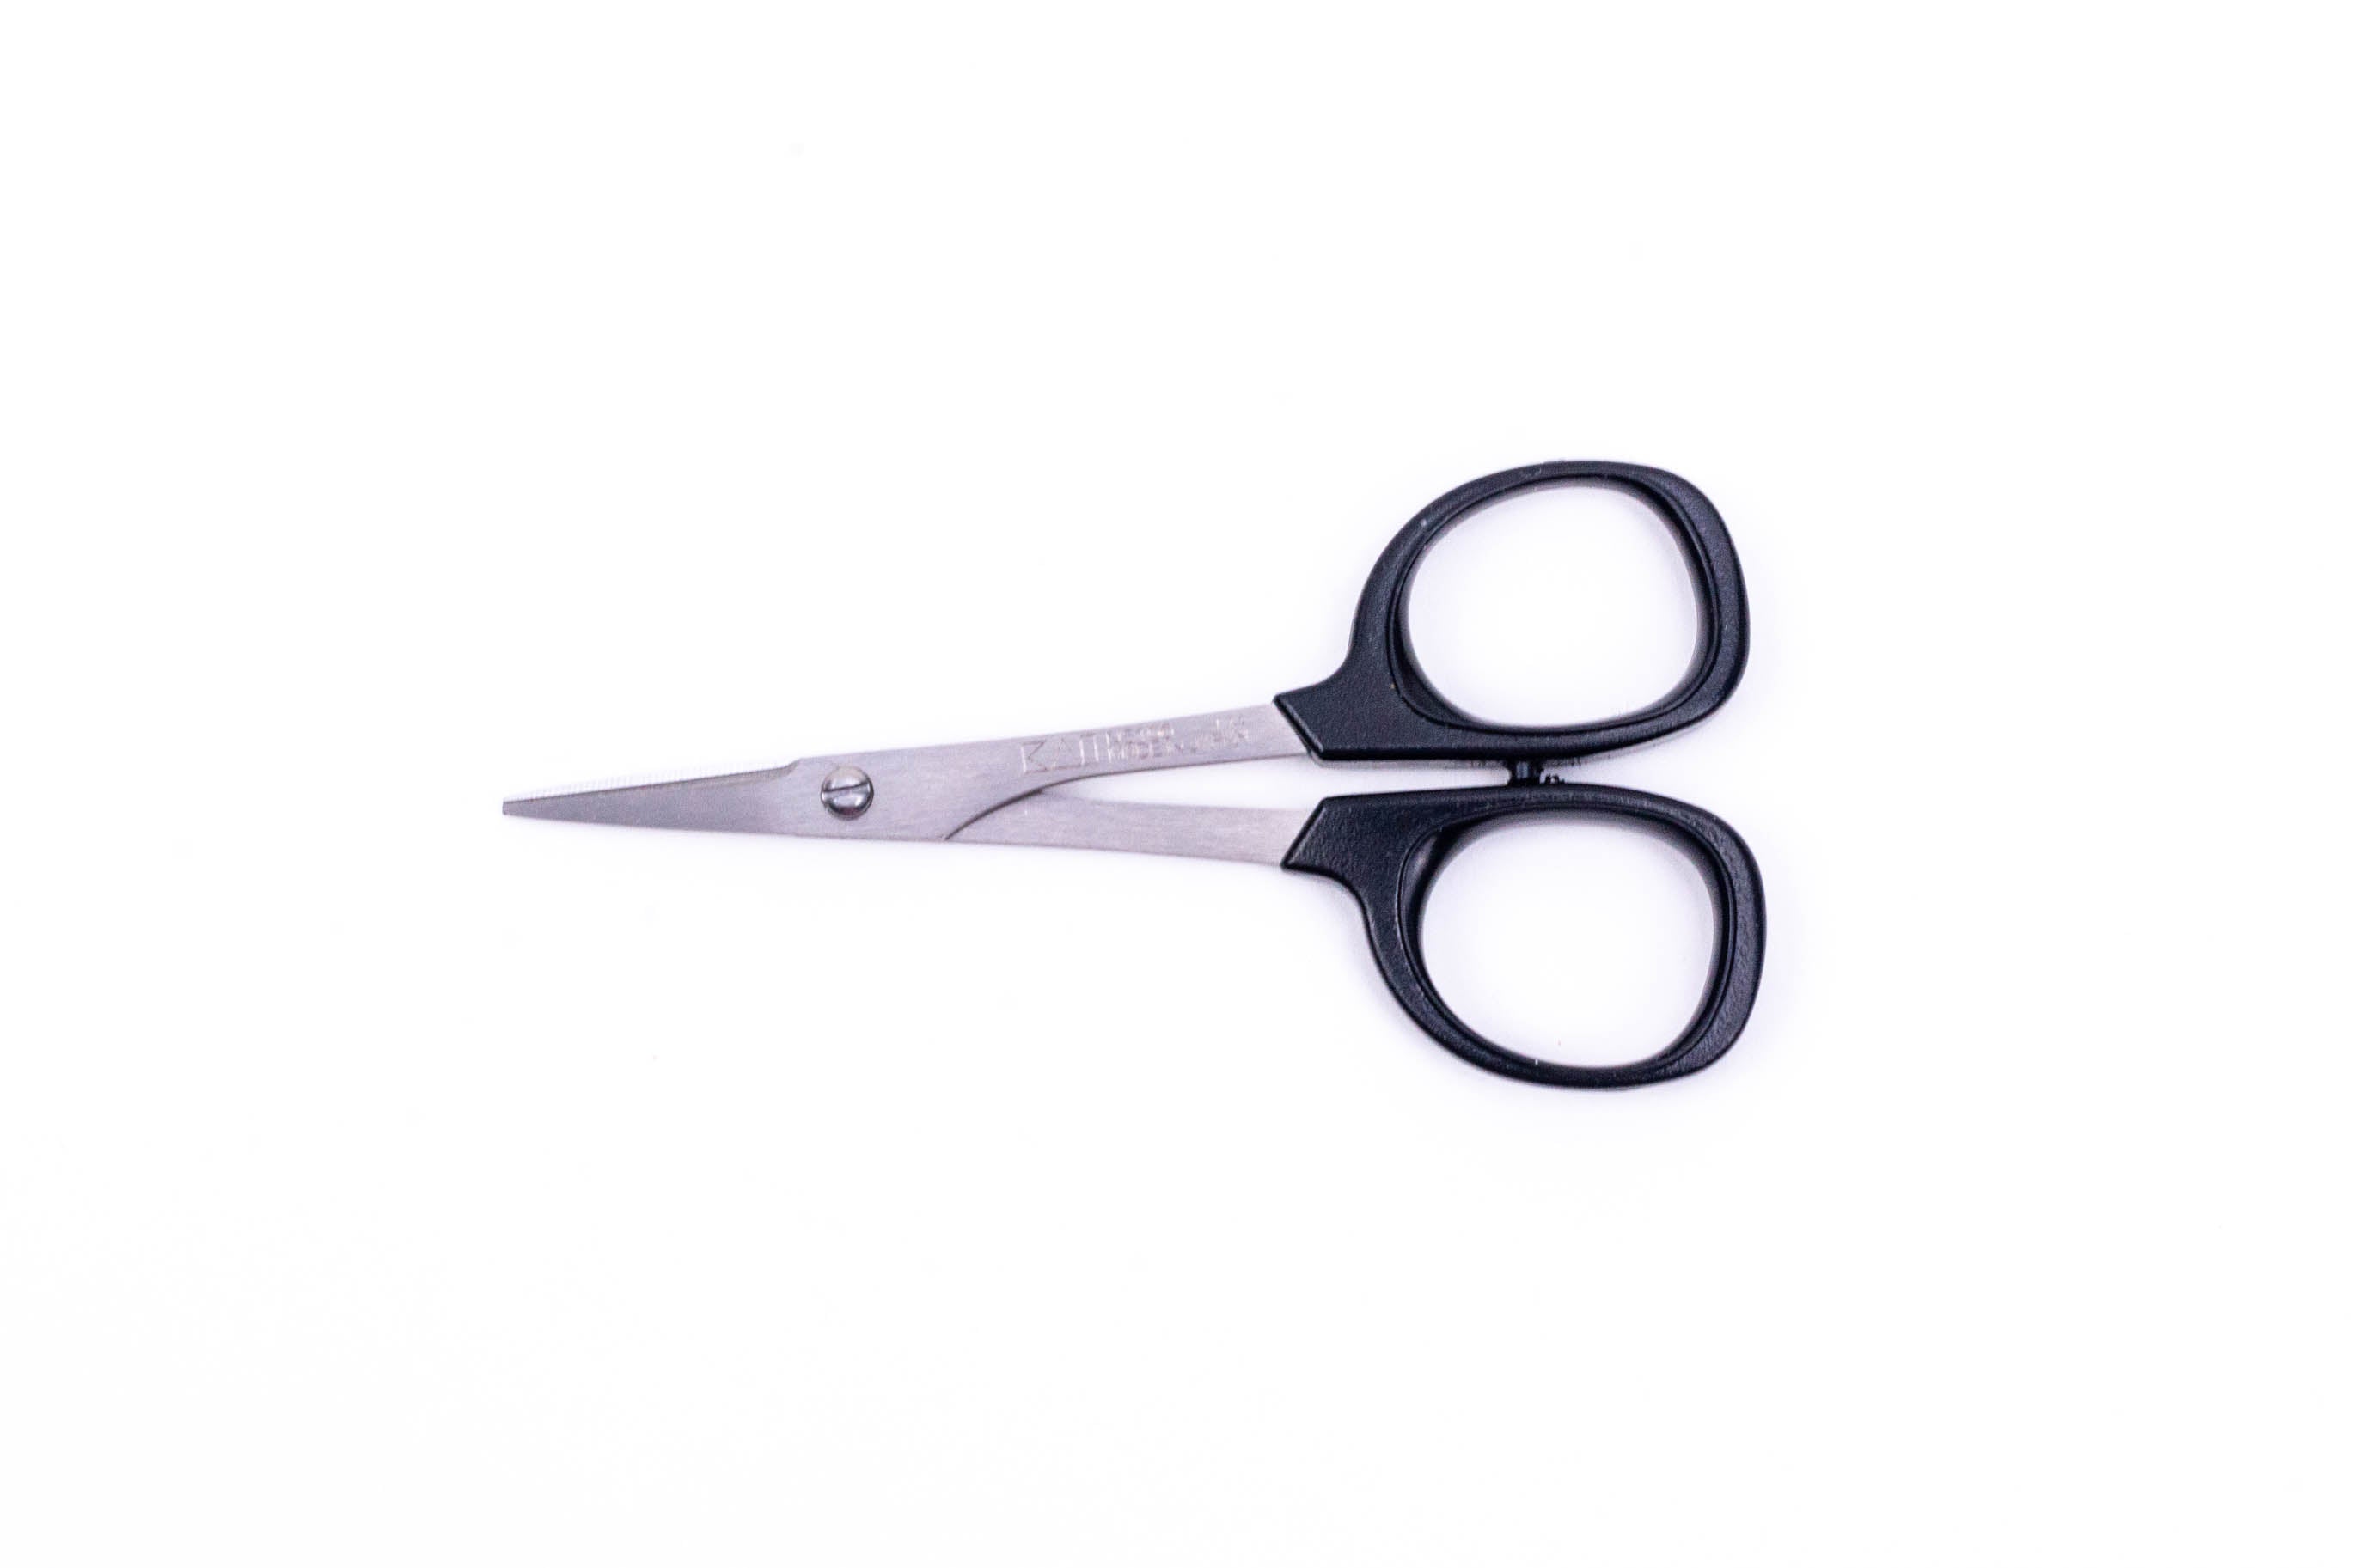 Kai 5165 6 1/2-inch Sewing Scissors